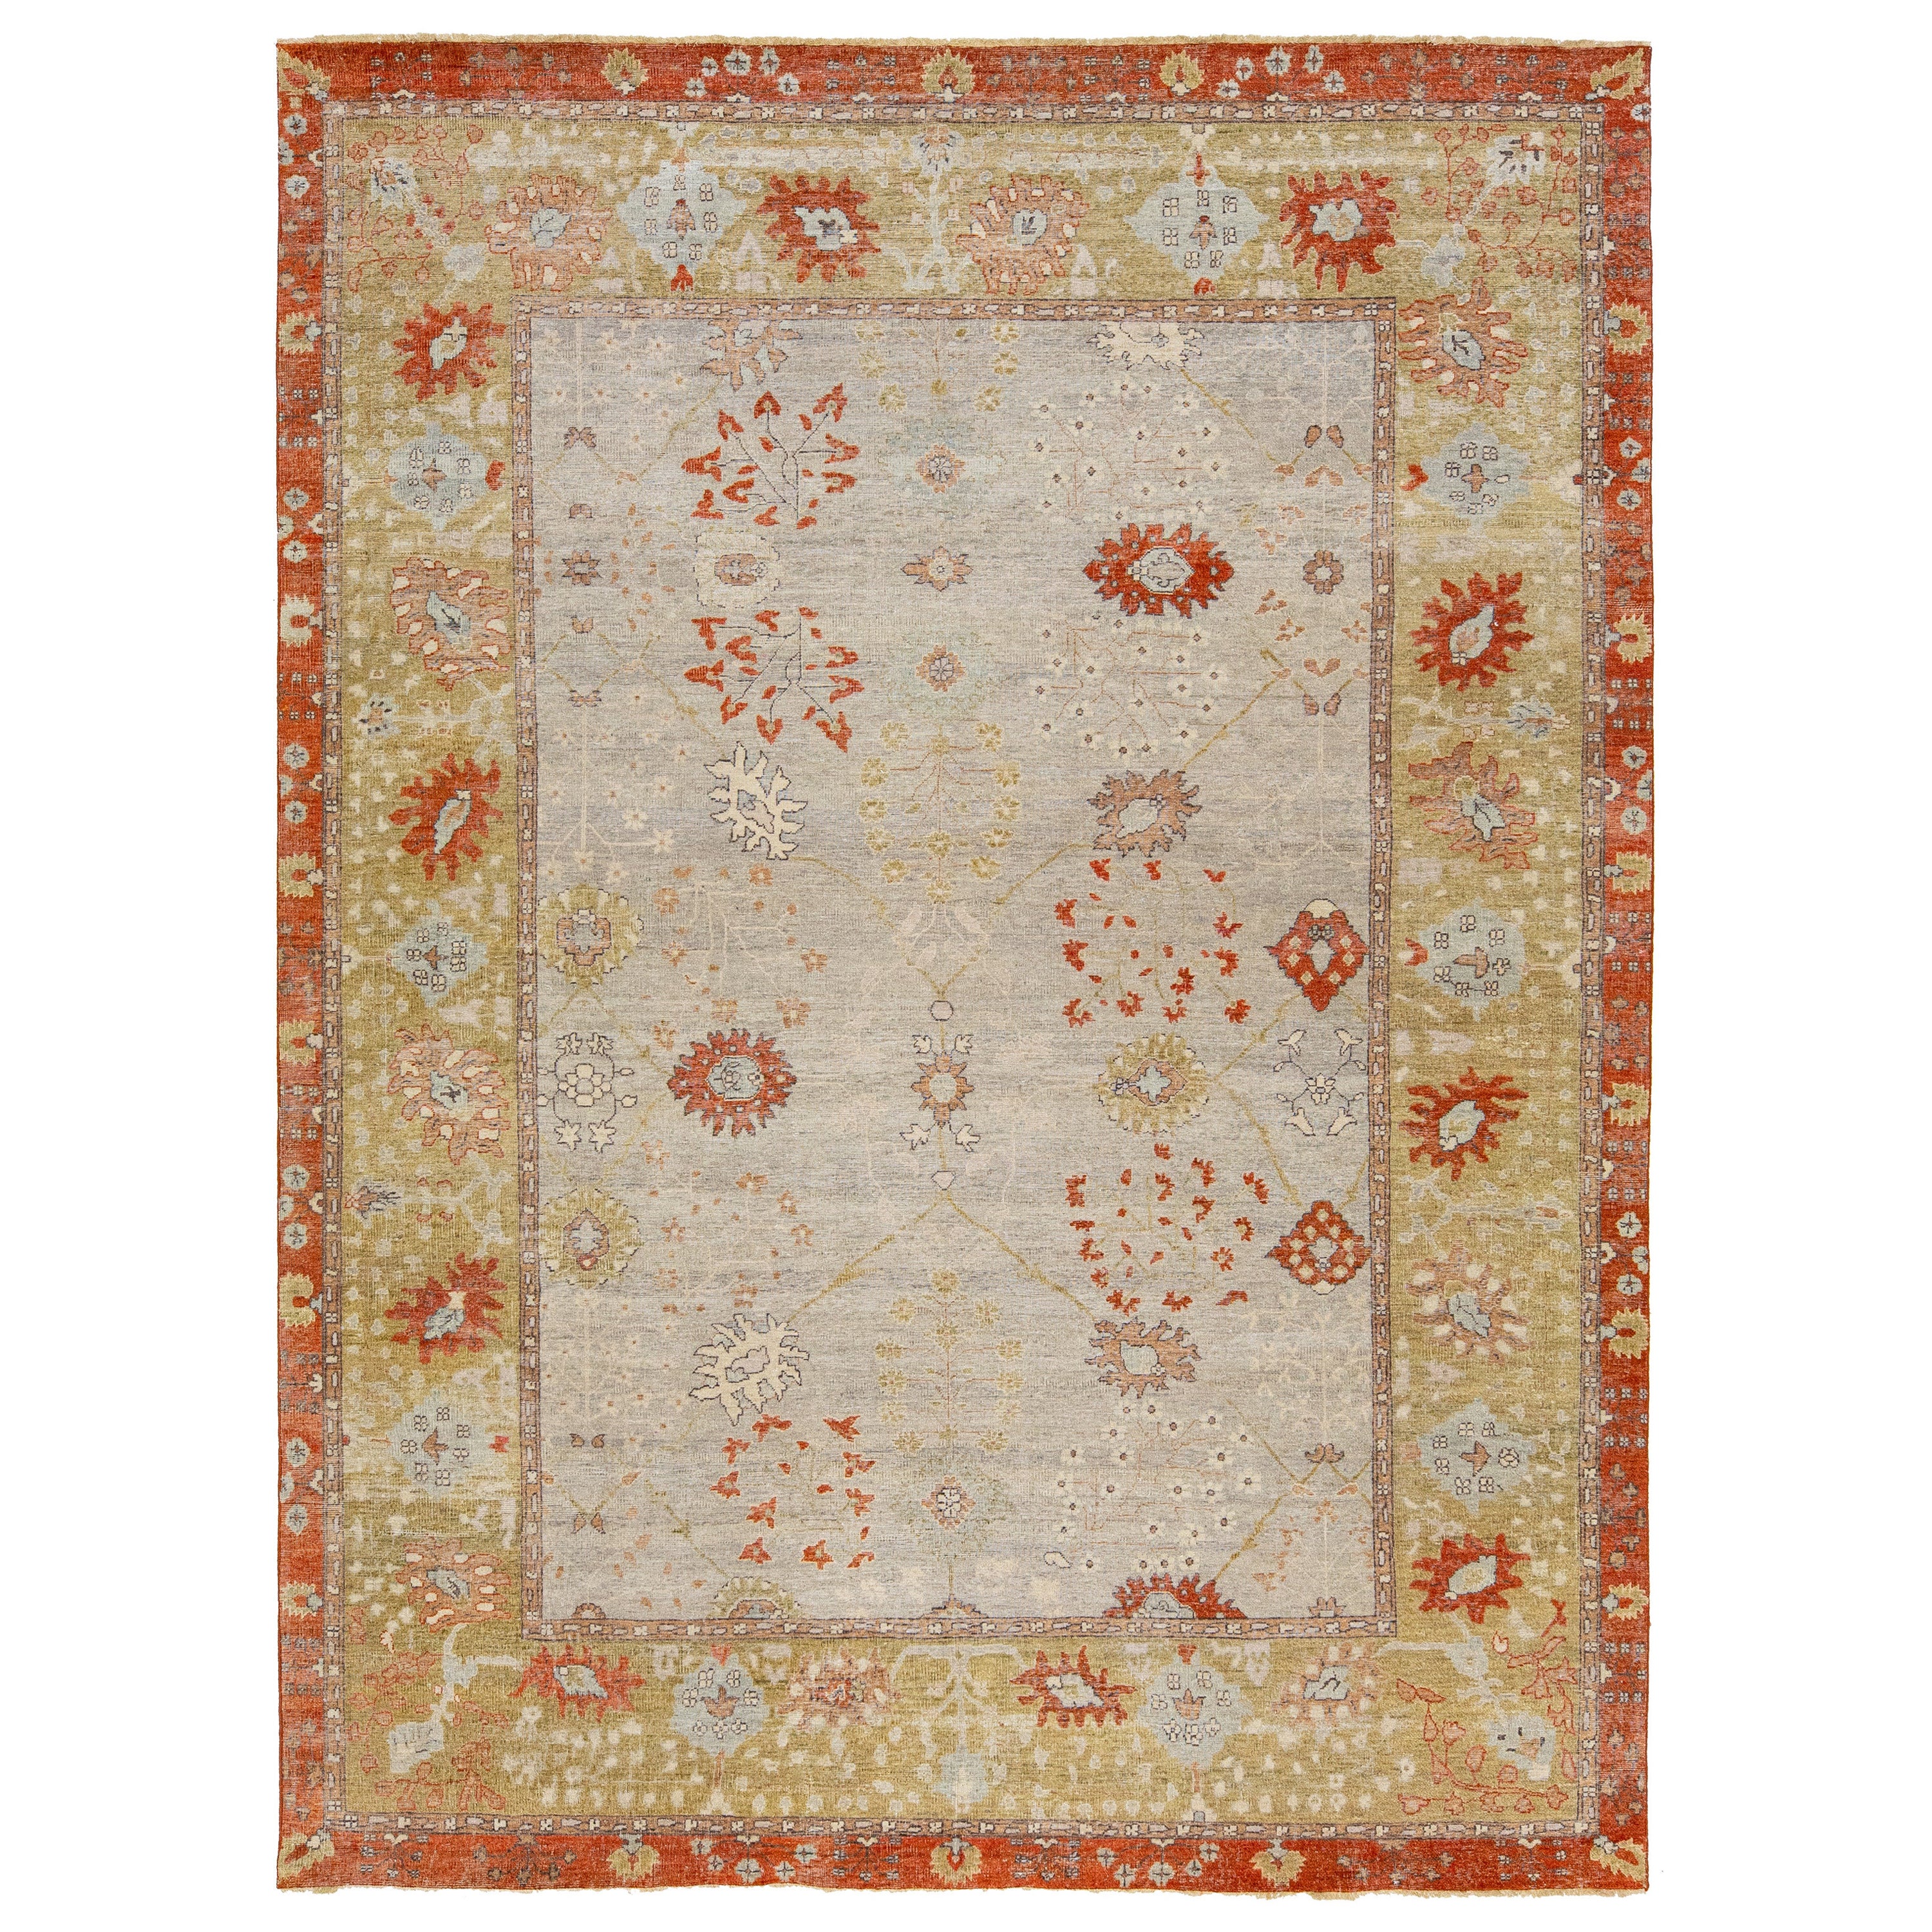 Handmade Tabriz Modern Indian Wool Rug in Gray & Orange Floral Motif by Apadana For Sale